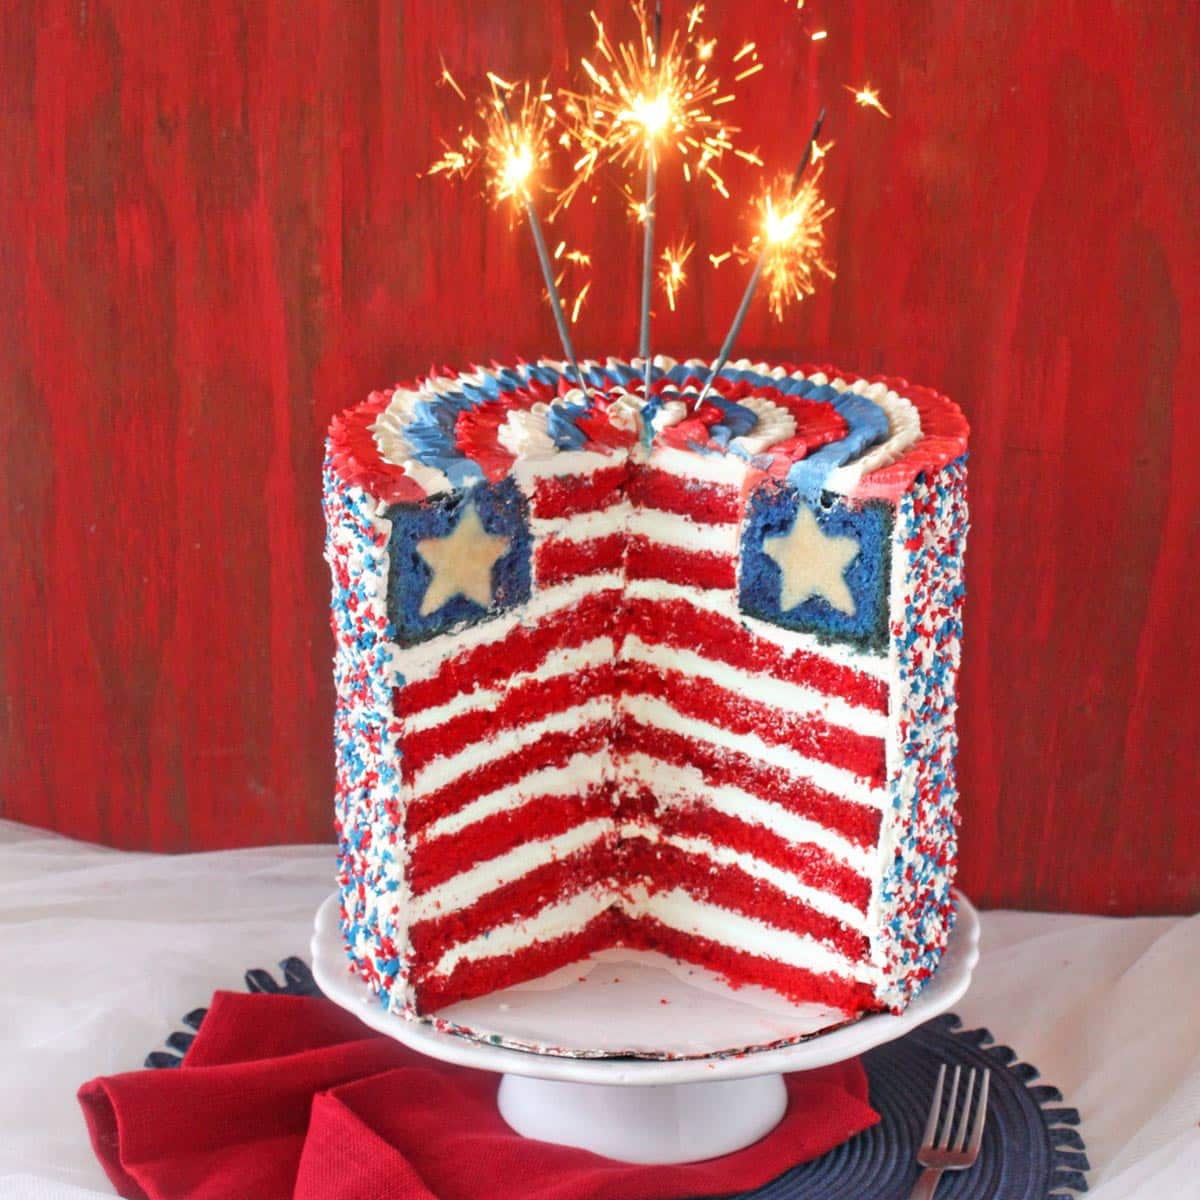 https://www.sugarhero.com/wp-content/uploads/2014/06/american-flag-layer-cake-square-1-featured-image.jpg